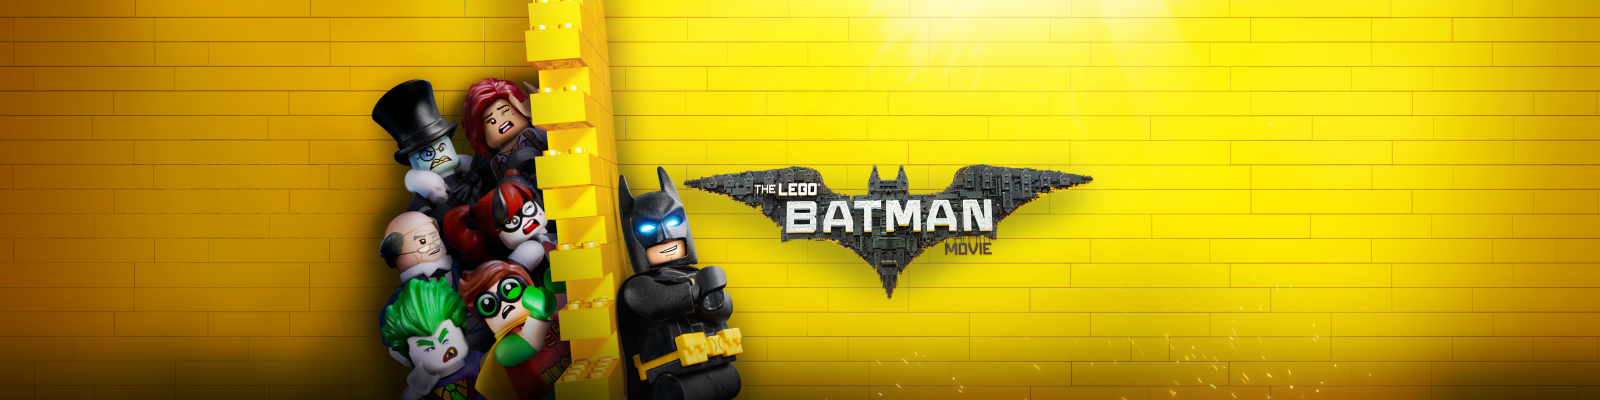 The LEGO Batman Movie 4K 2017 big poster